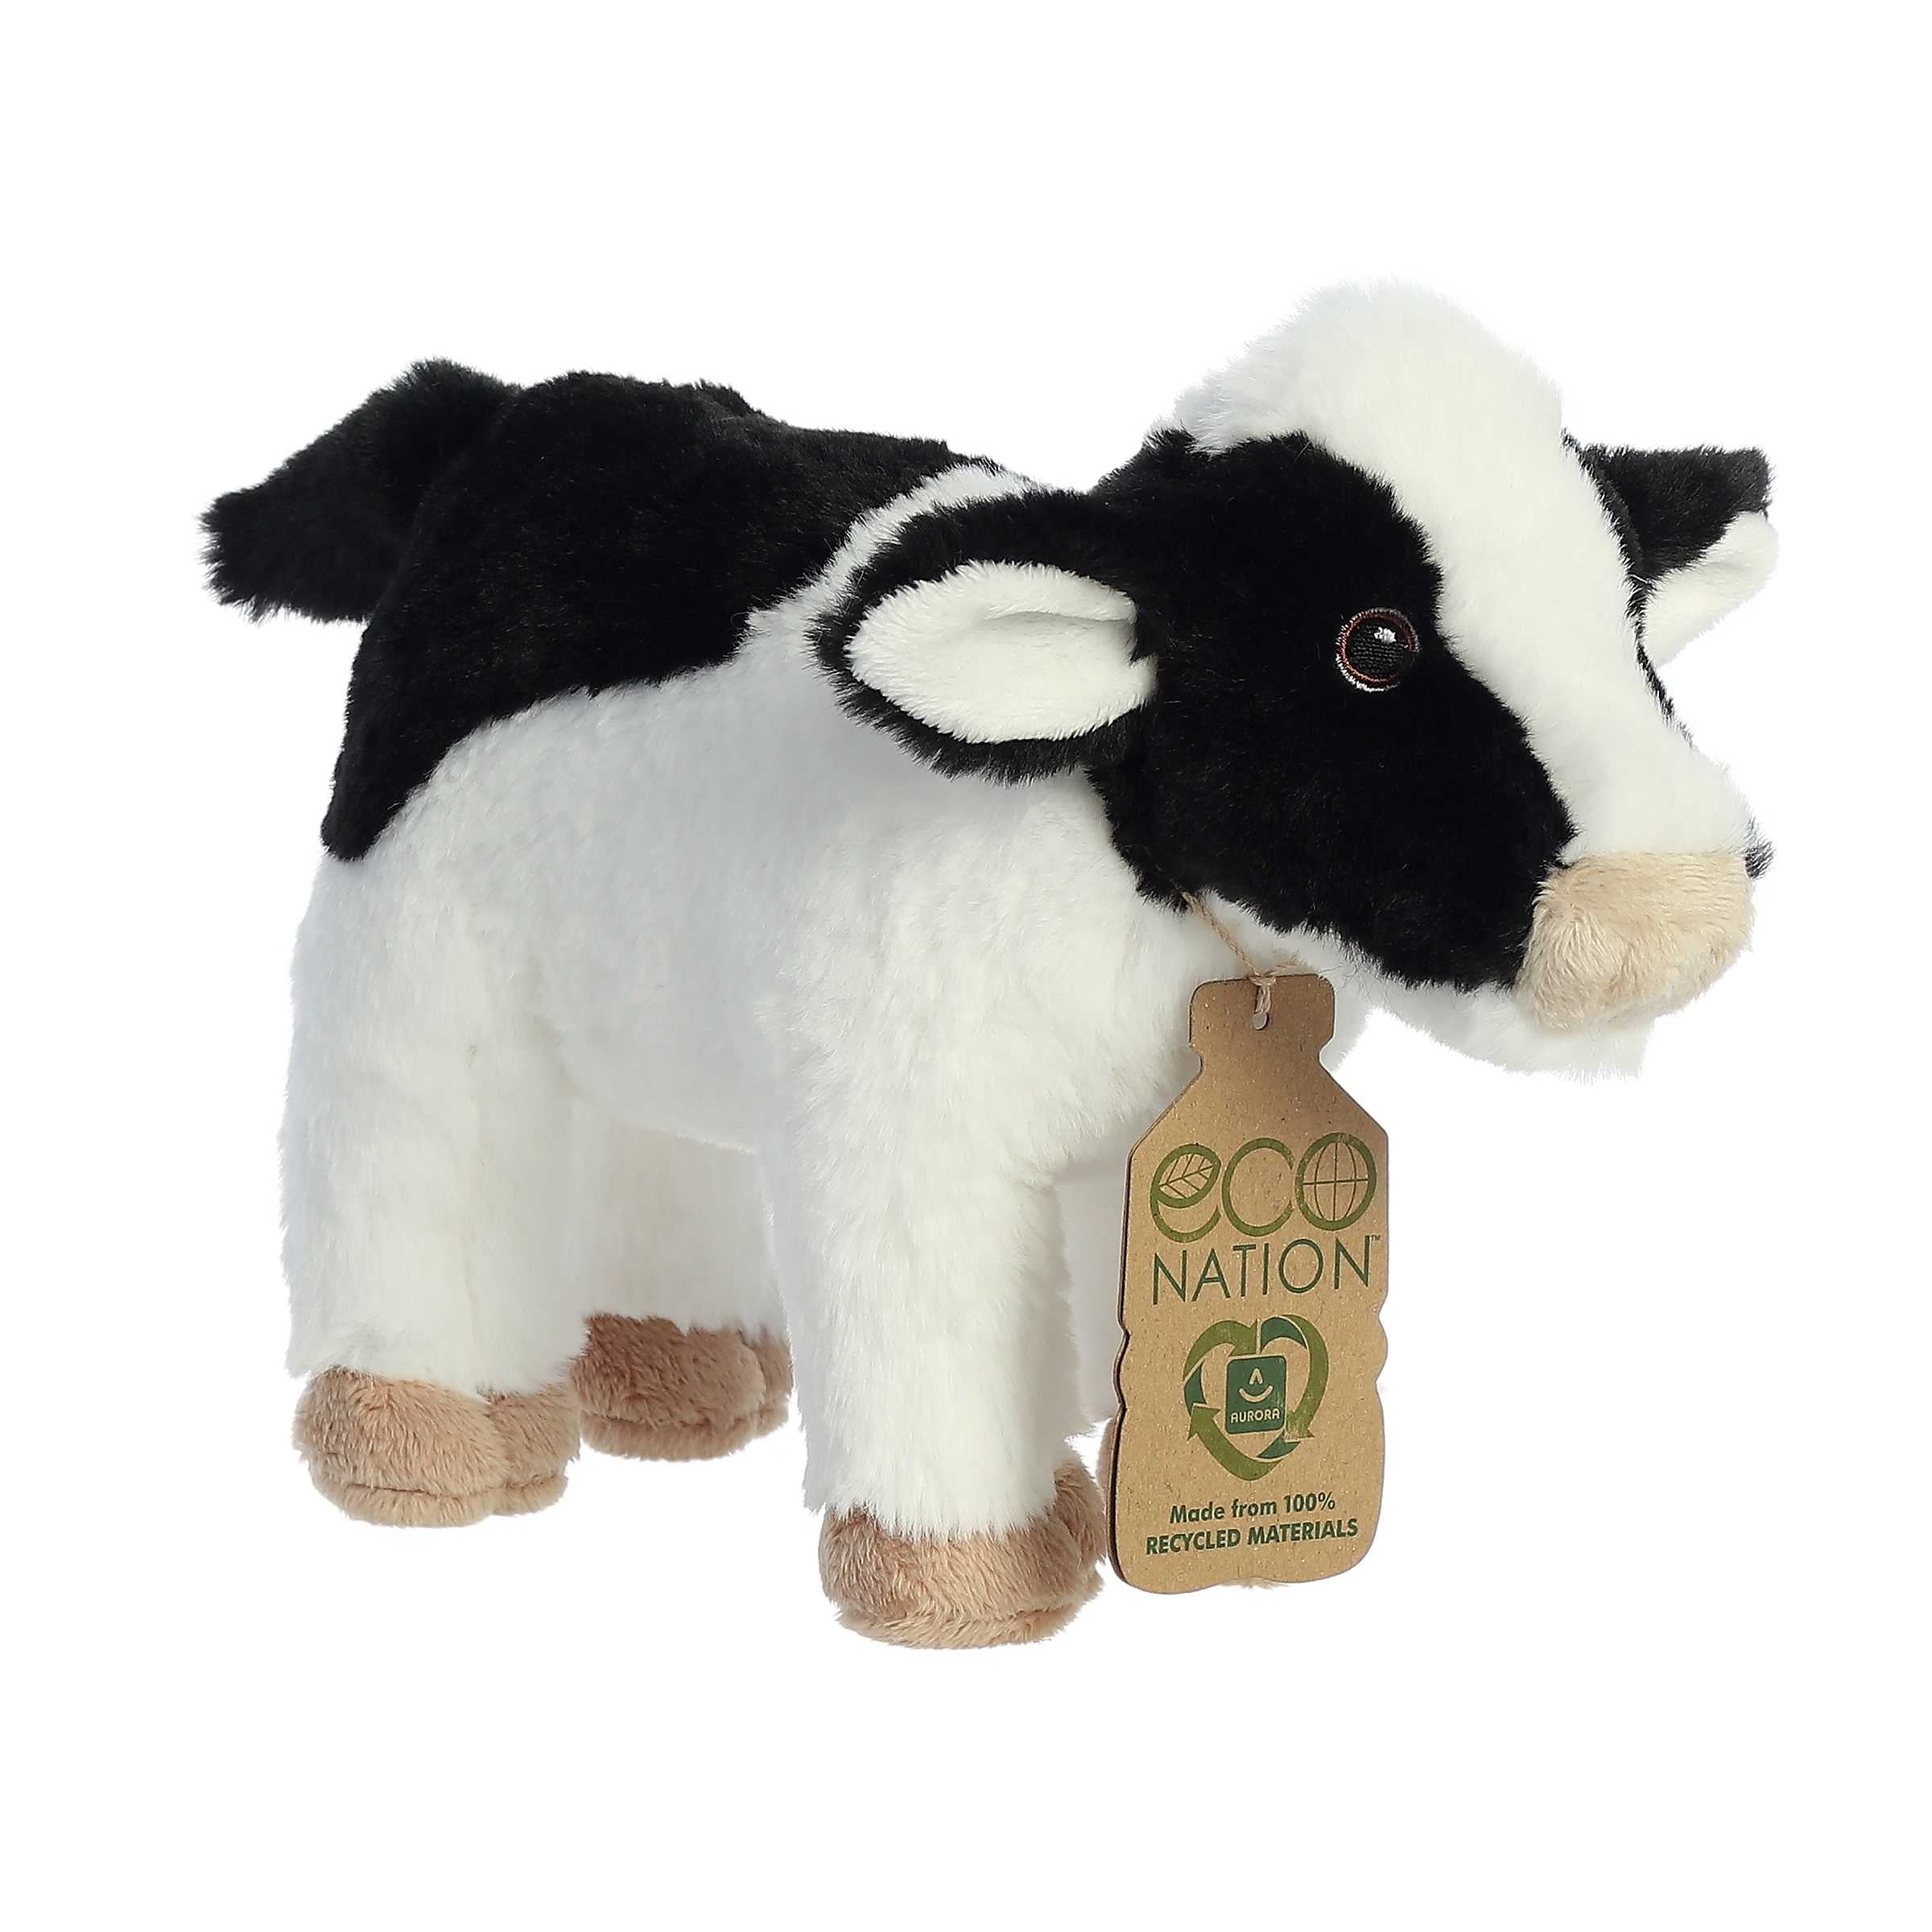 Cute Scottish Highland Cattle Plush Baby Cow Stuffed Animal Toy 